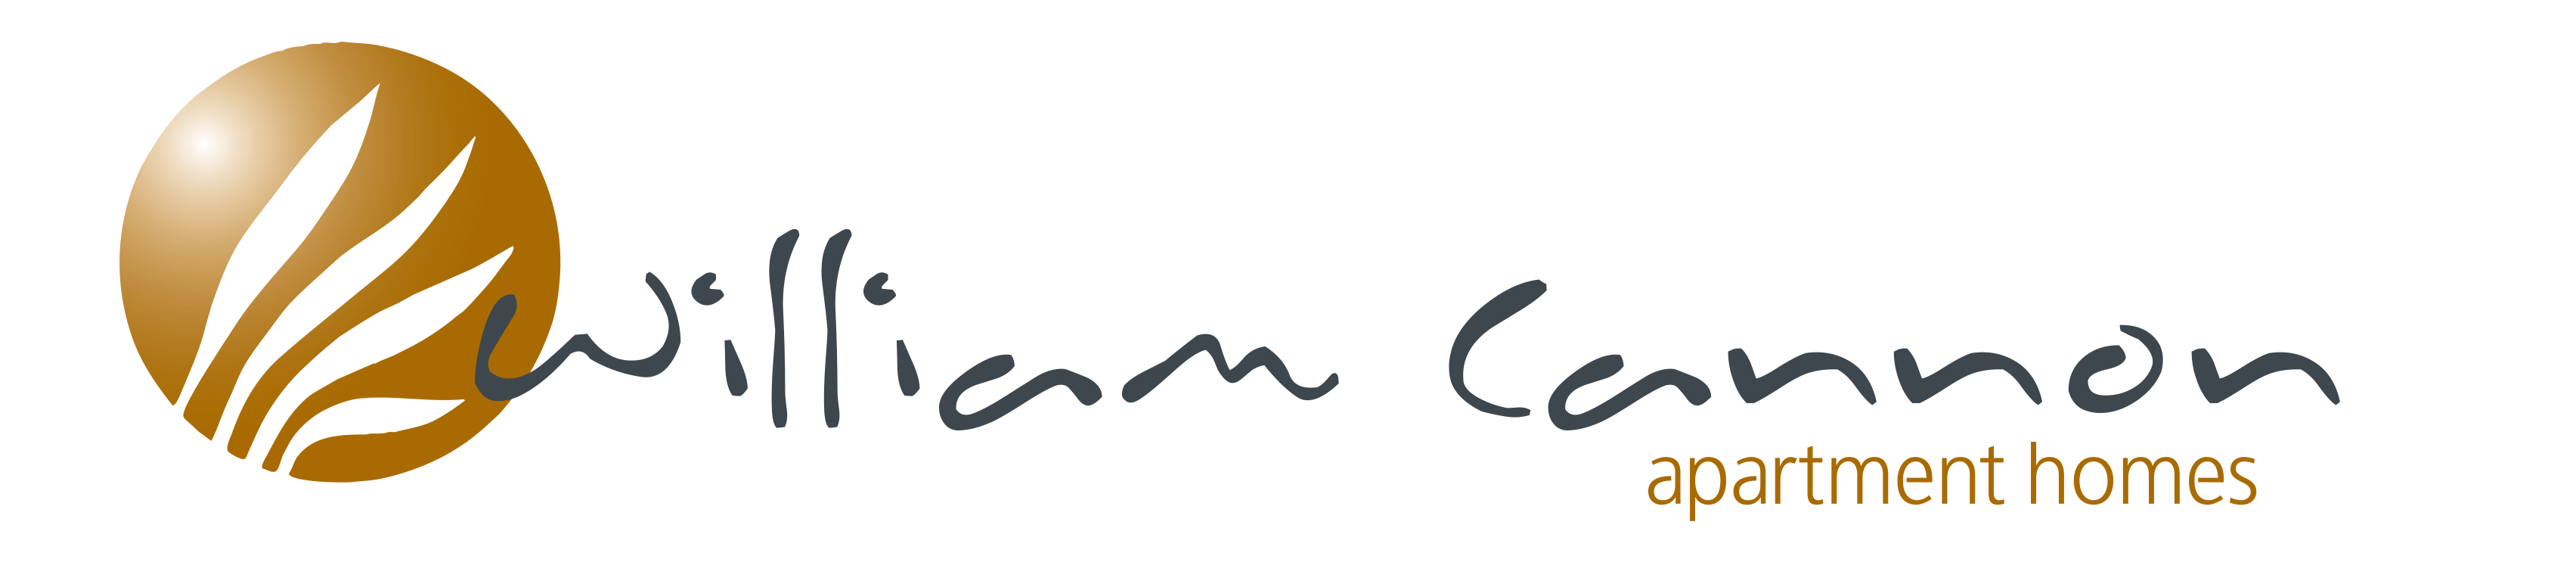 William Cannon logo